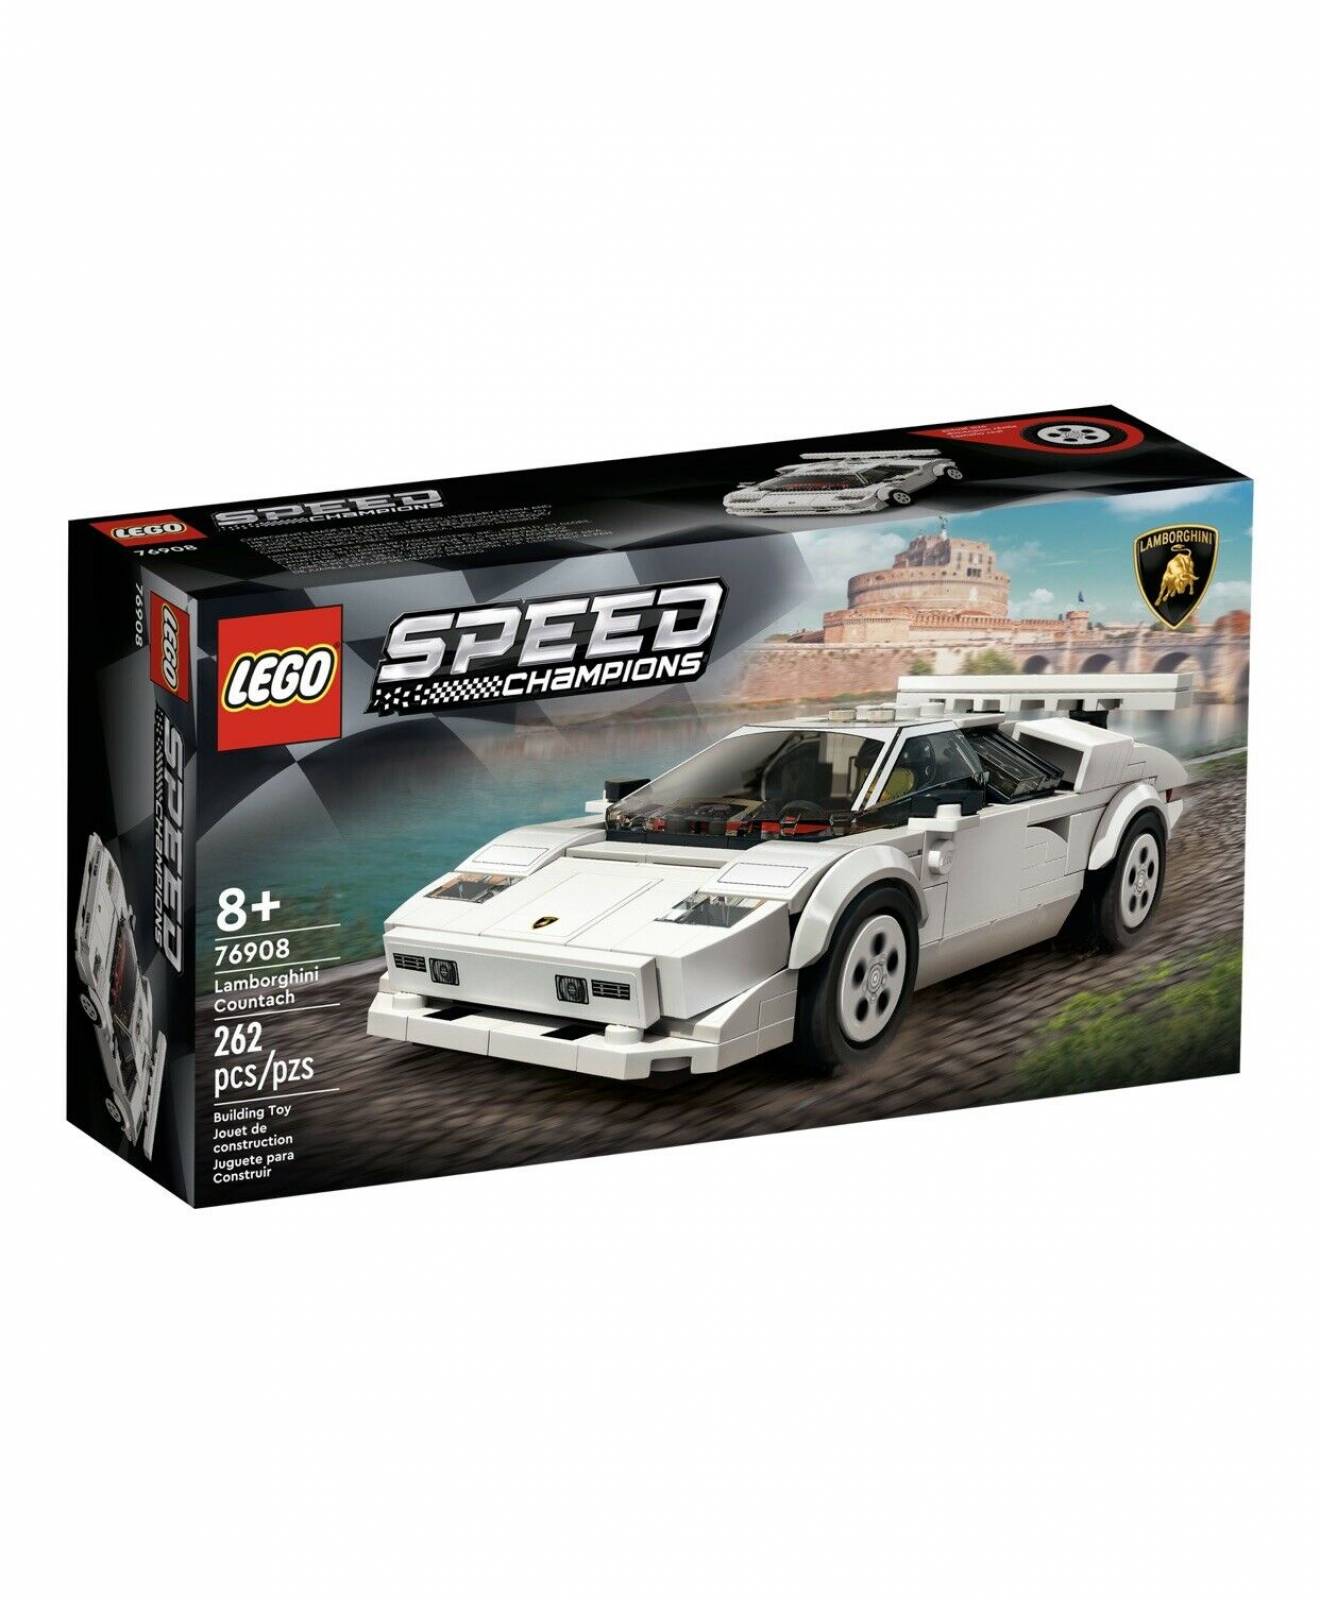 LEGO Speed Champions Lamborghini Countach 76908 8+